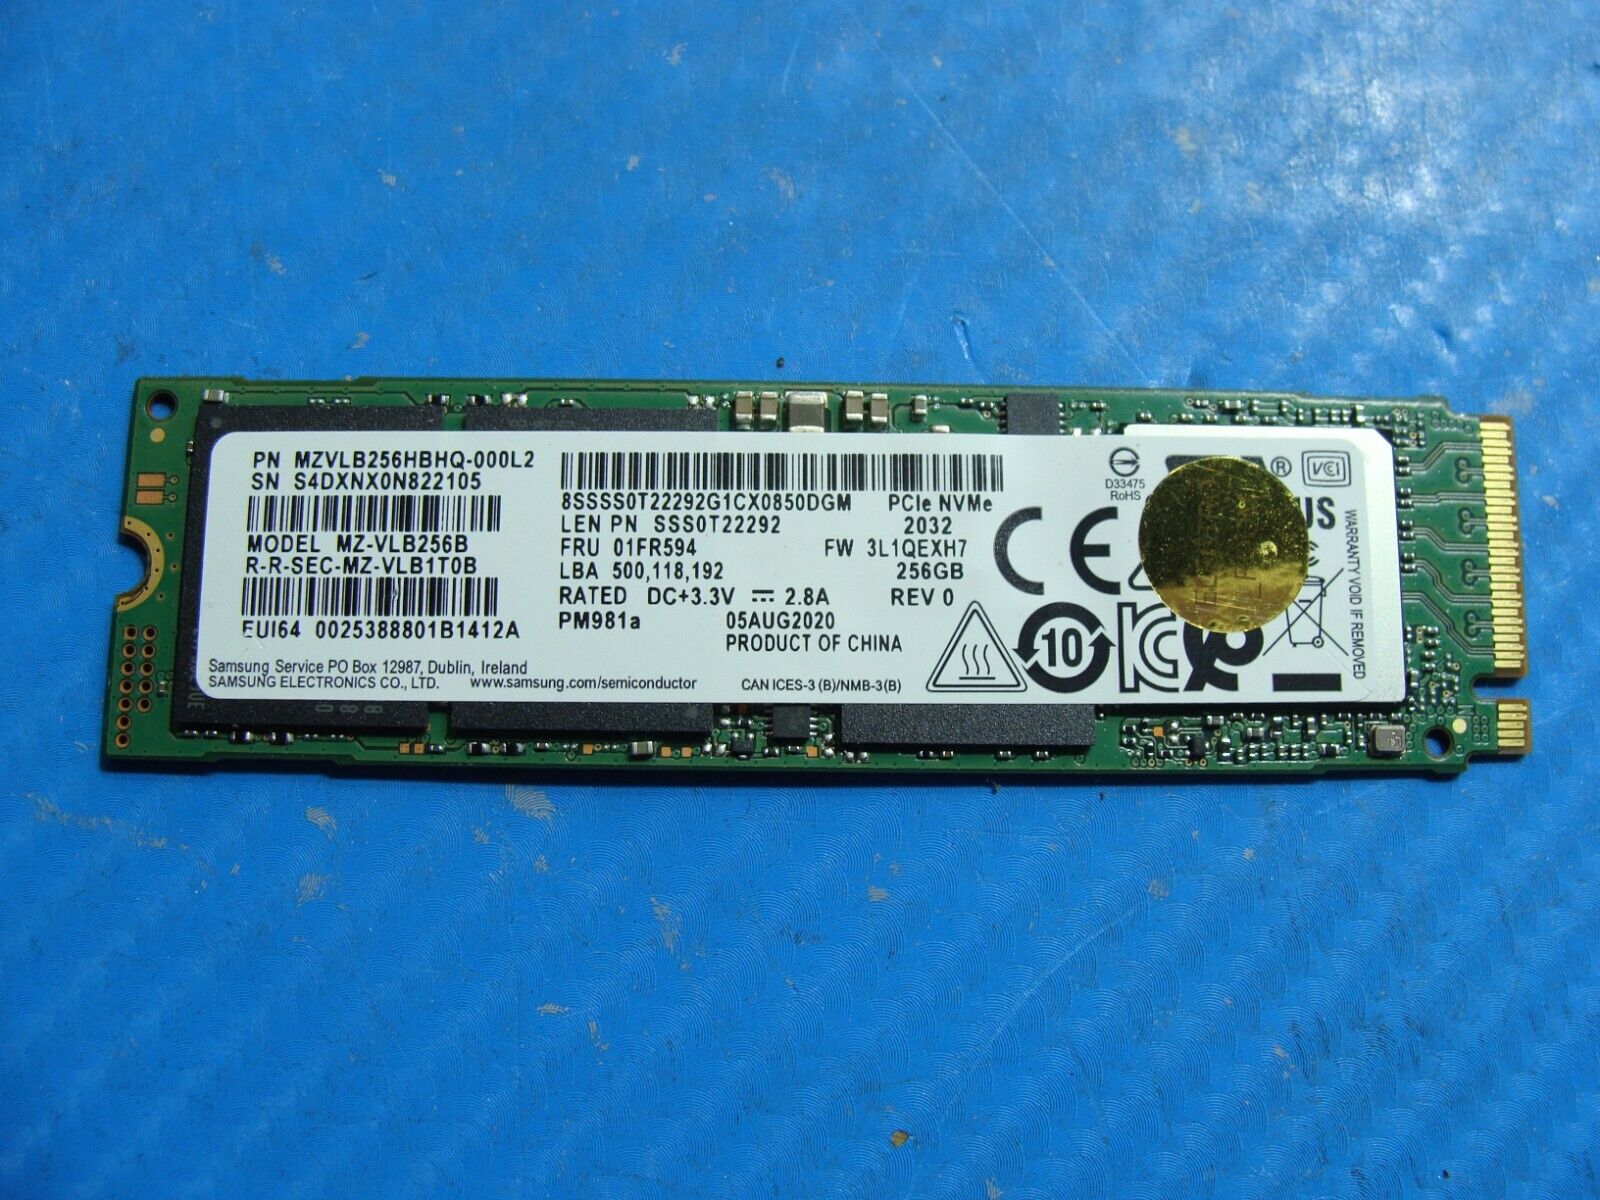 Lenovo E580 Samsung 256GB M.2 NVMe SSD Solid State Drive MZVLB256HBHQ-000L2